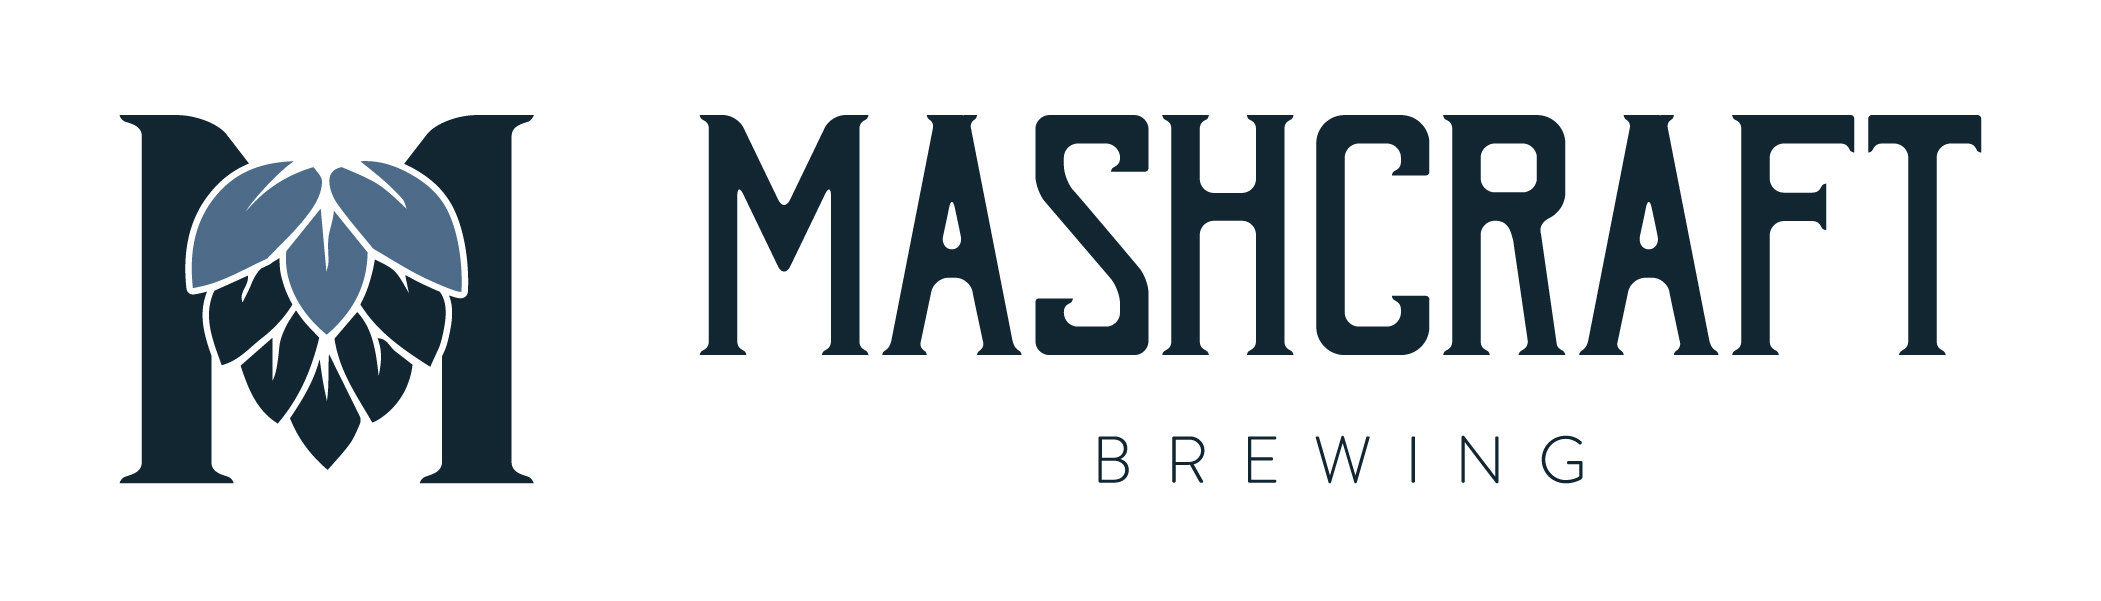 Mashcraft Brewing